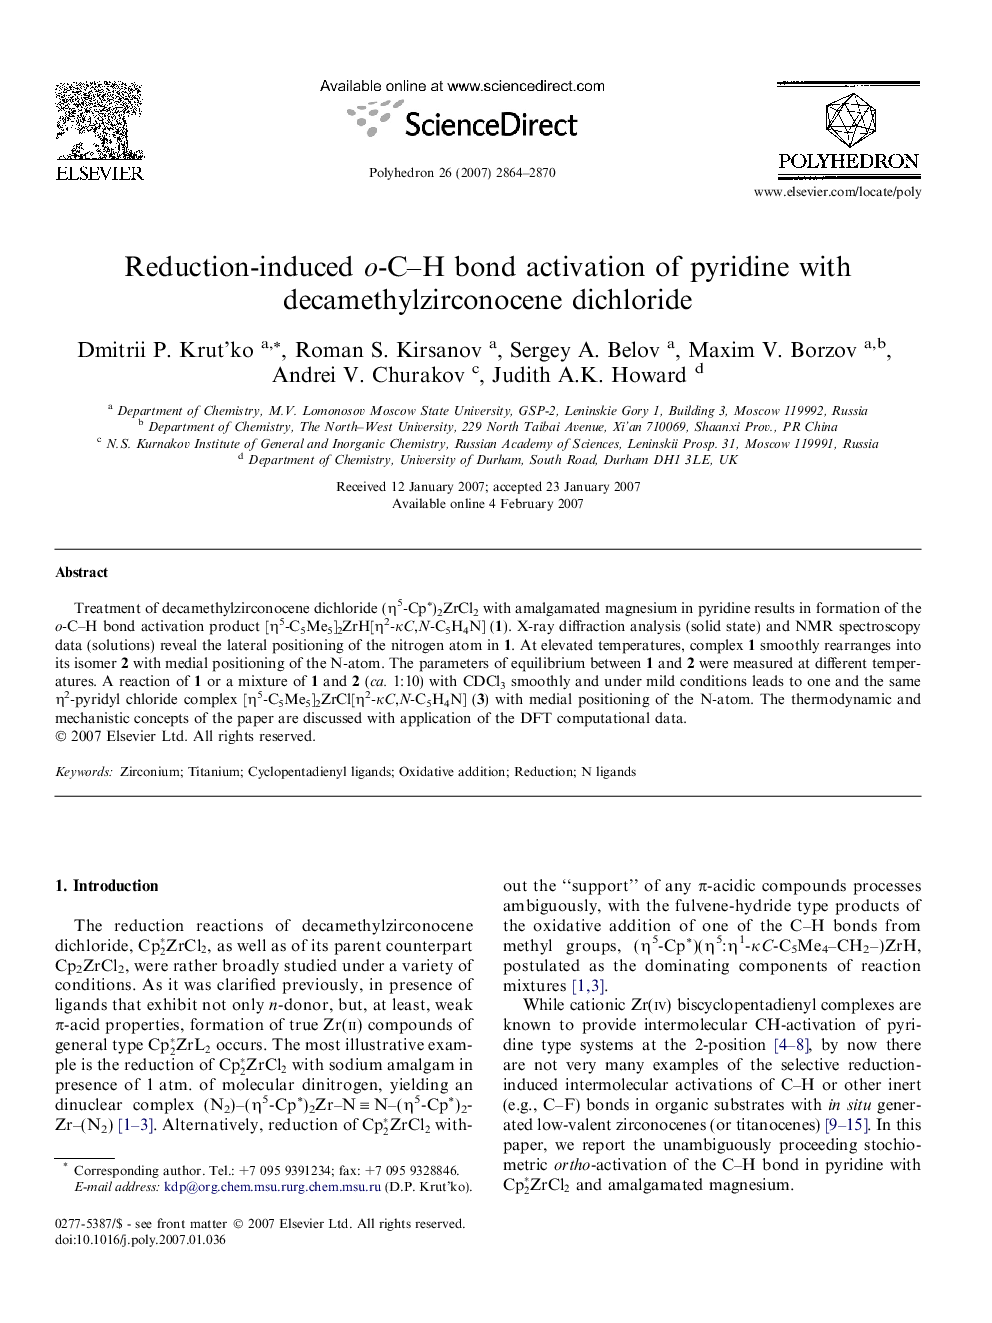 Reduction-induced o-C–H bond activation of pyridine with decamethylzirconocene dichloride